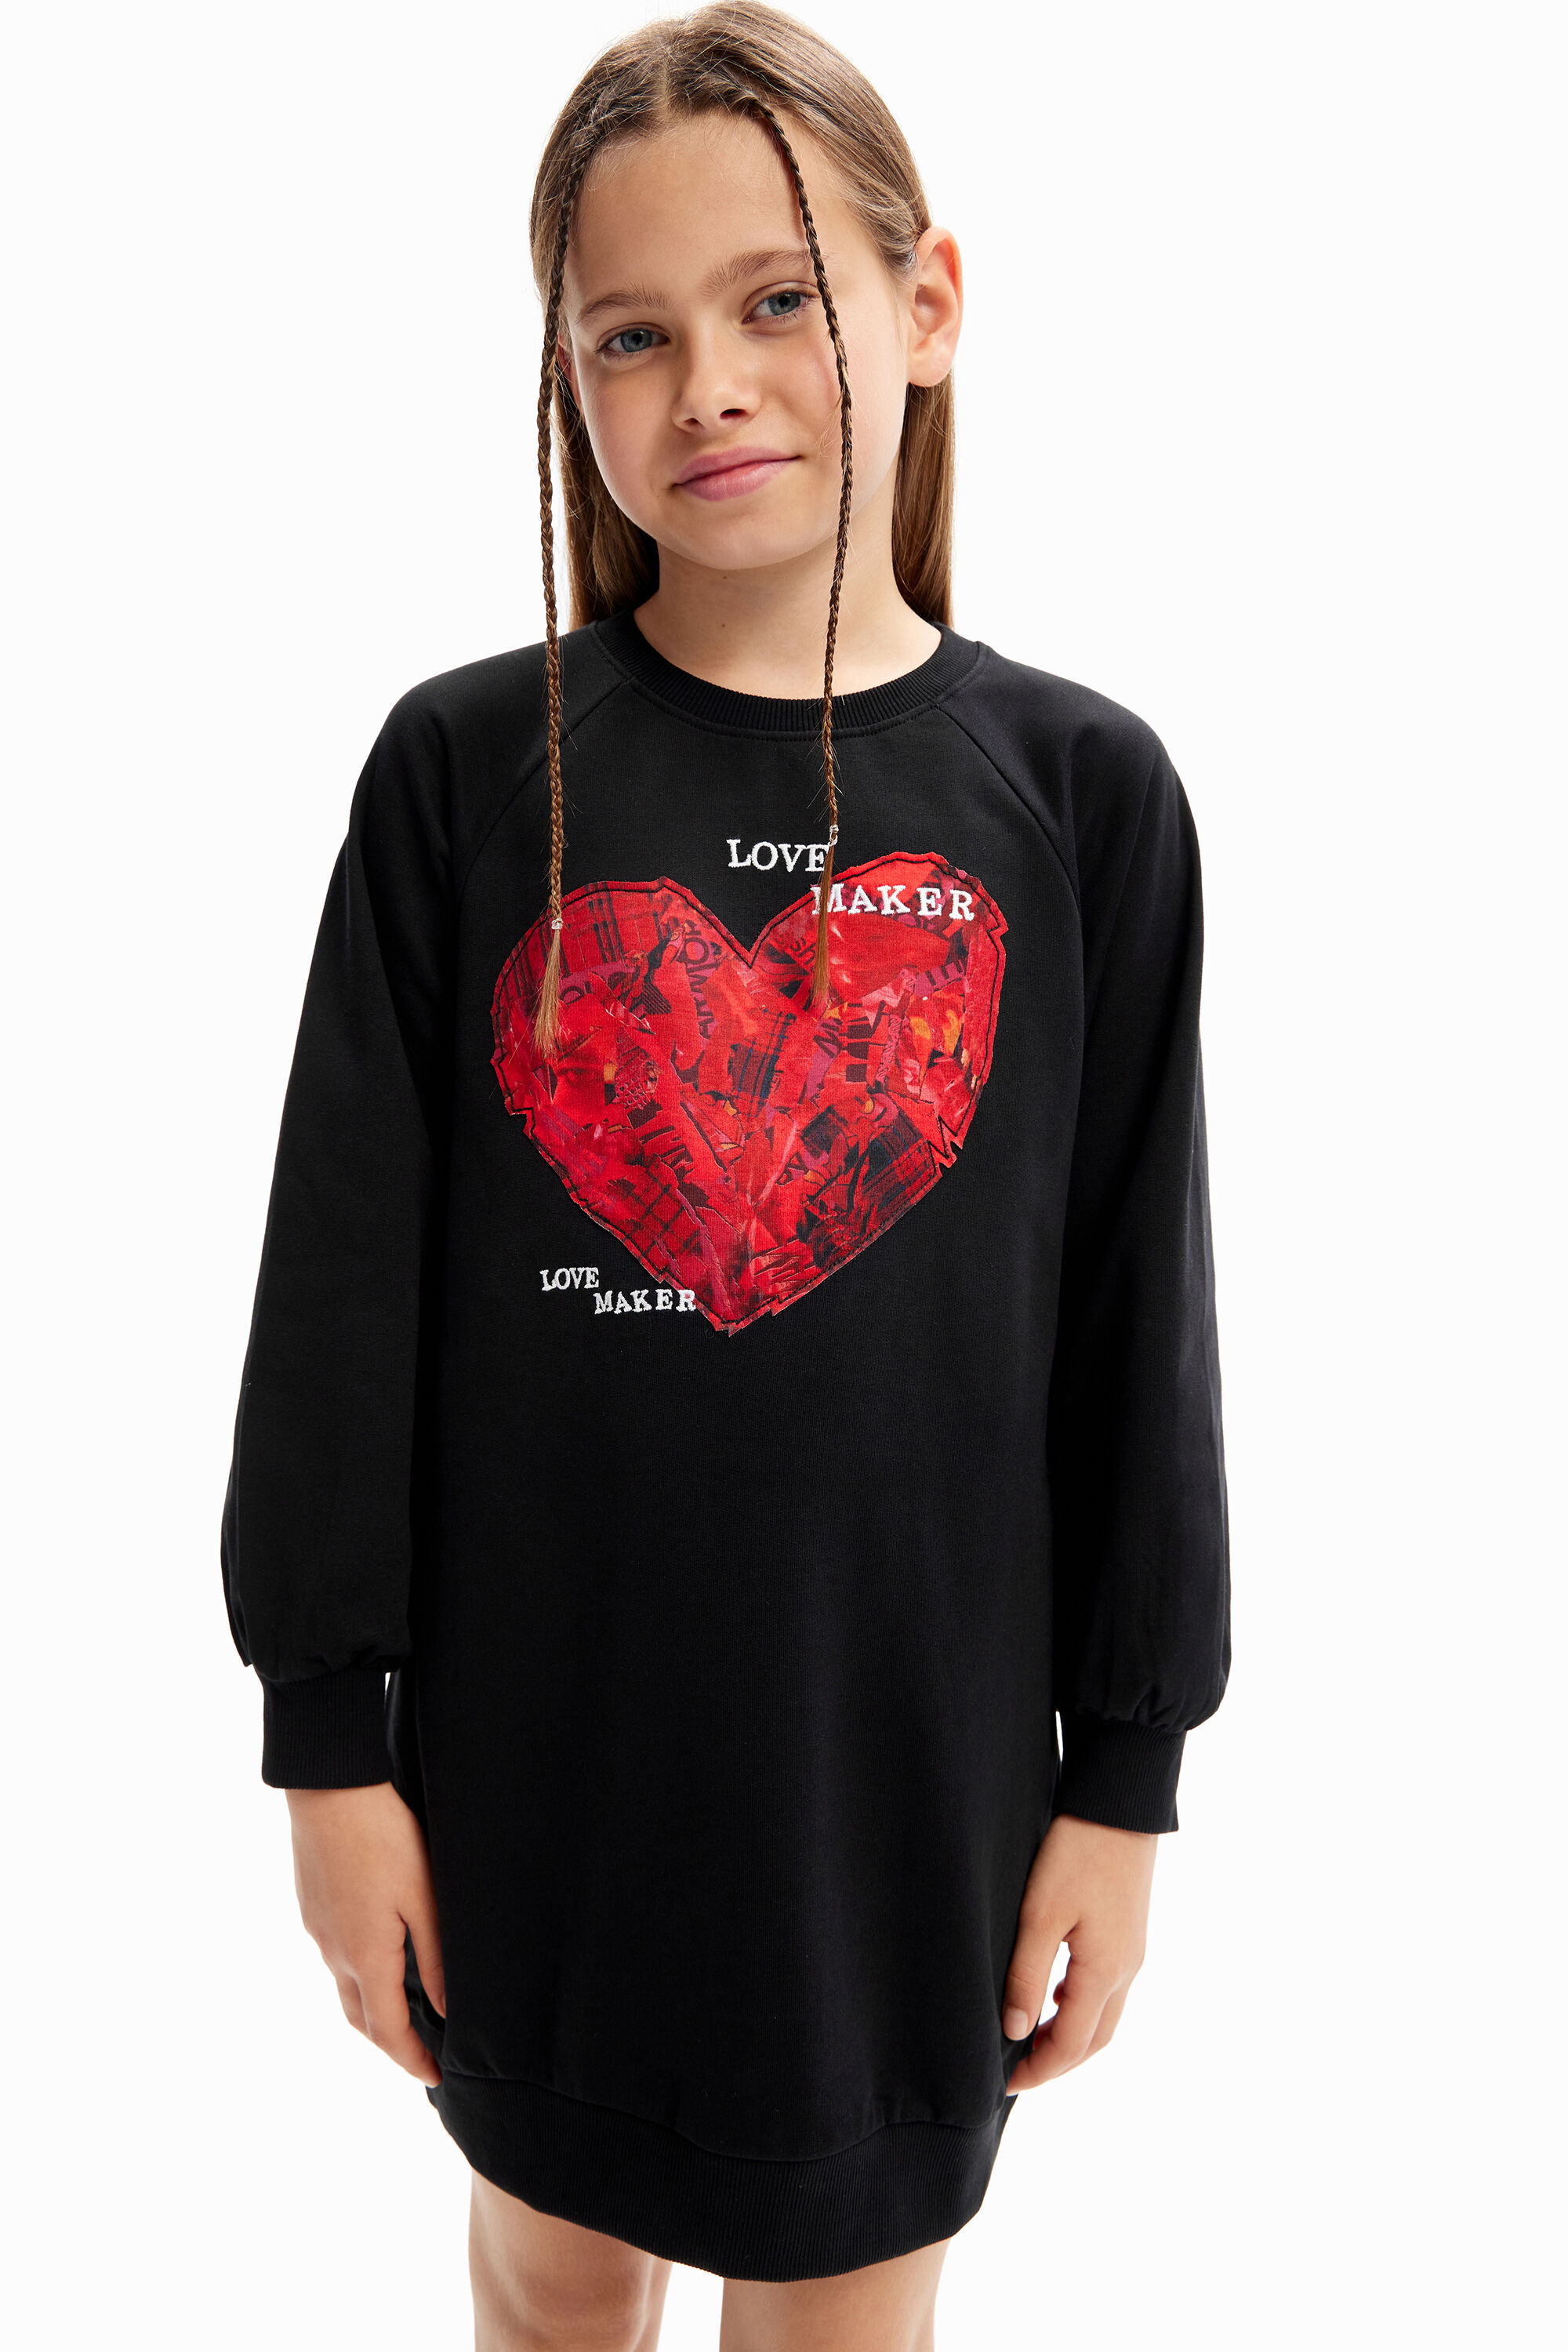 Desigual Heart sweatshirt dress